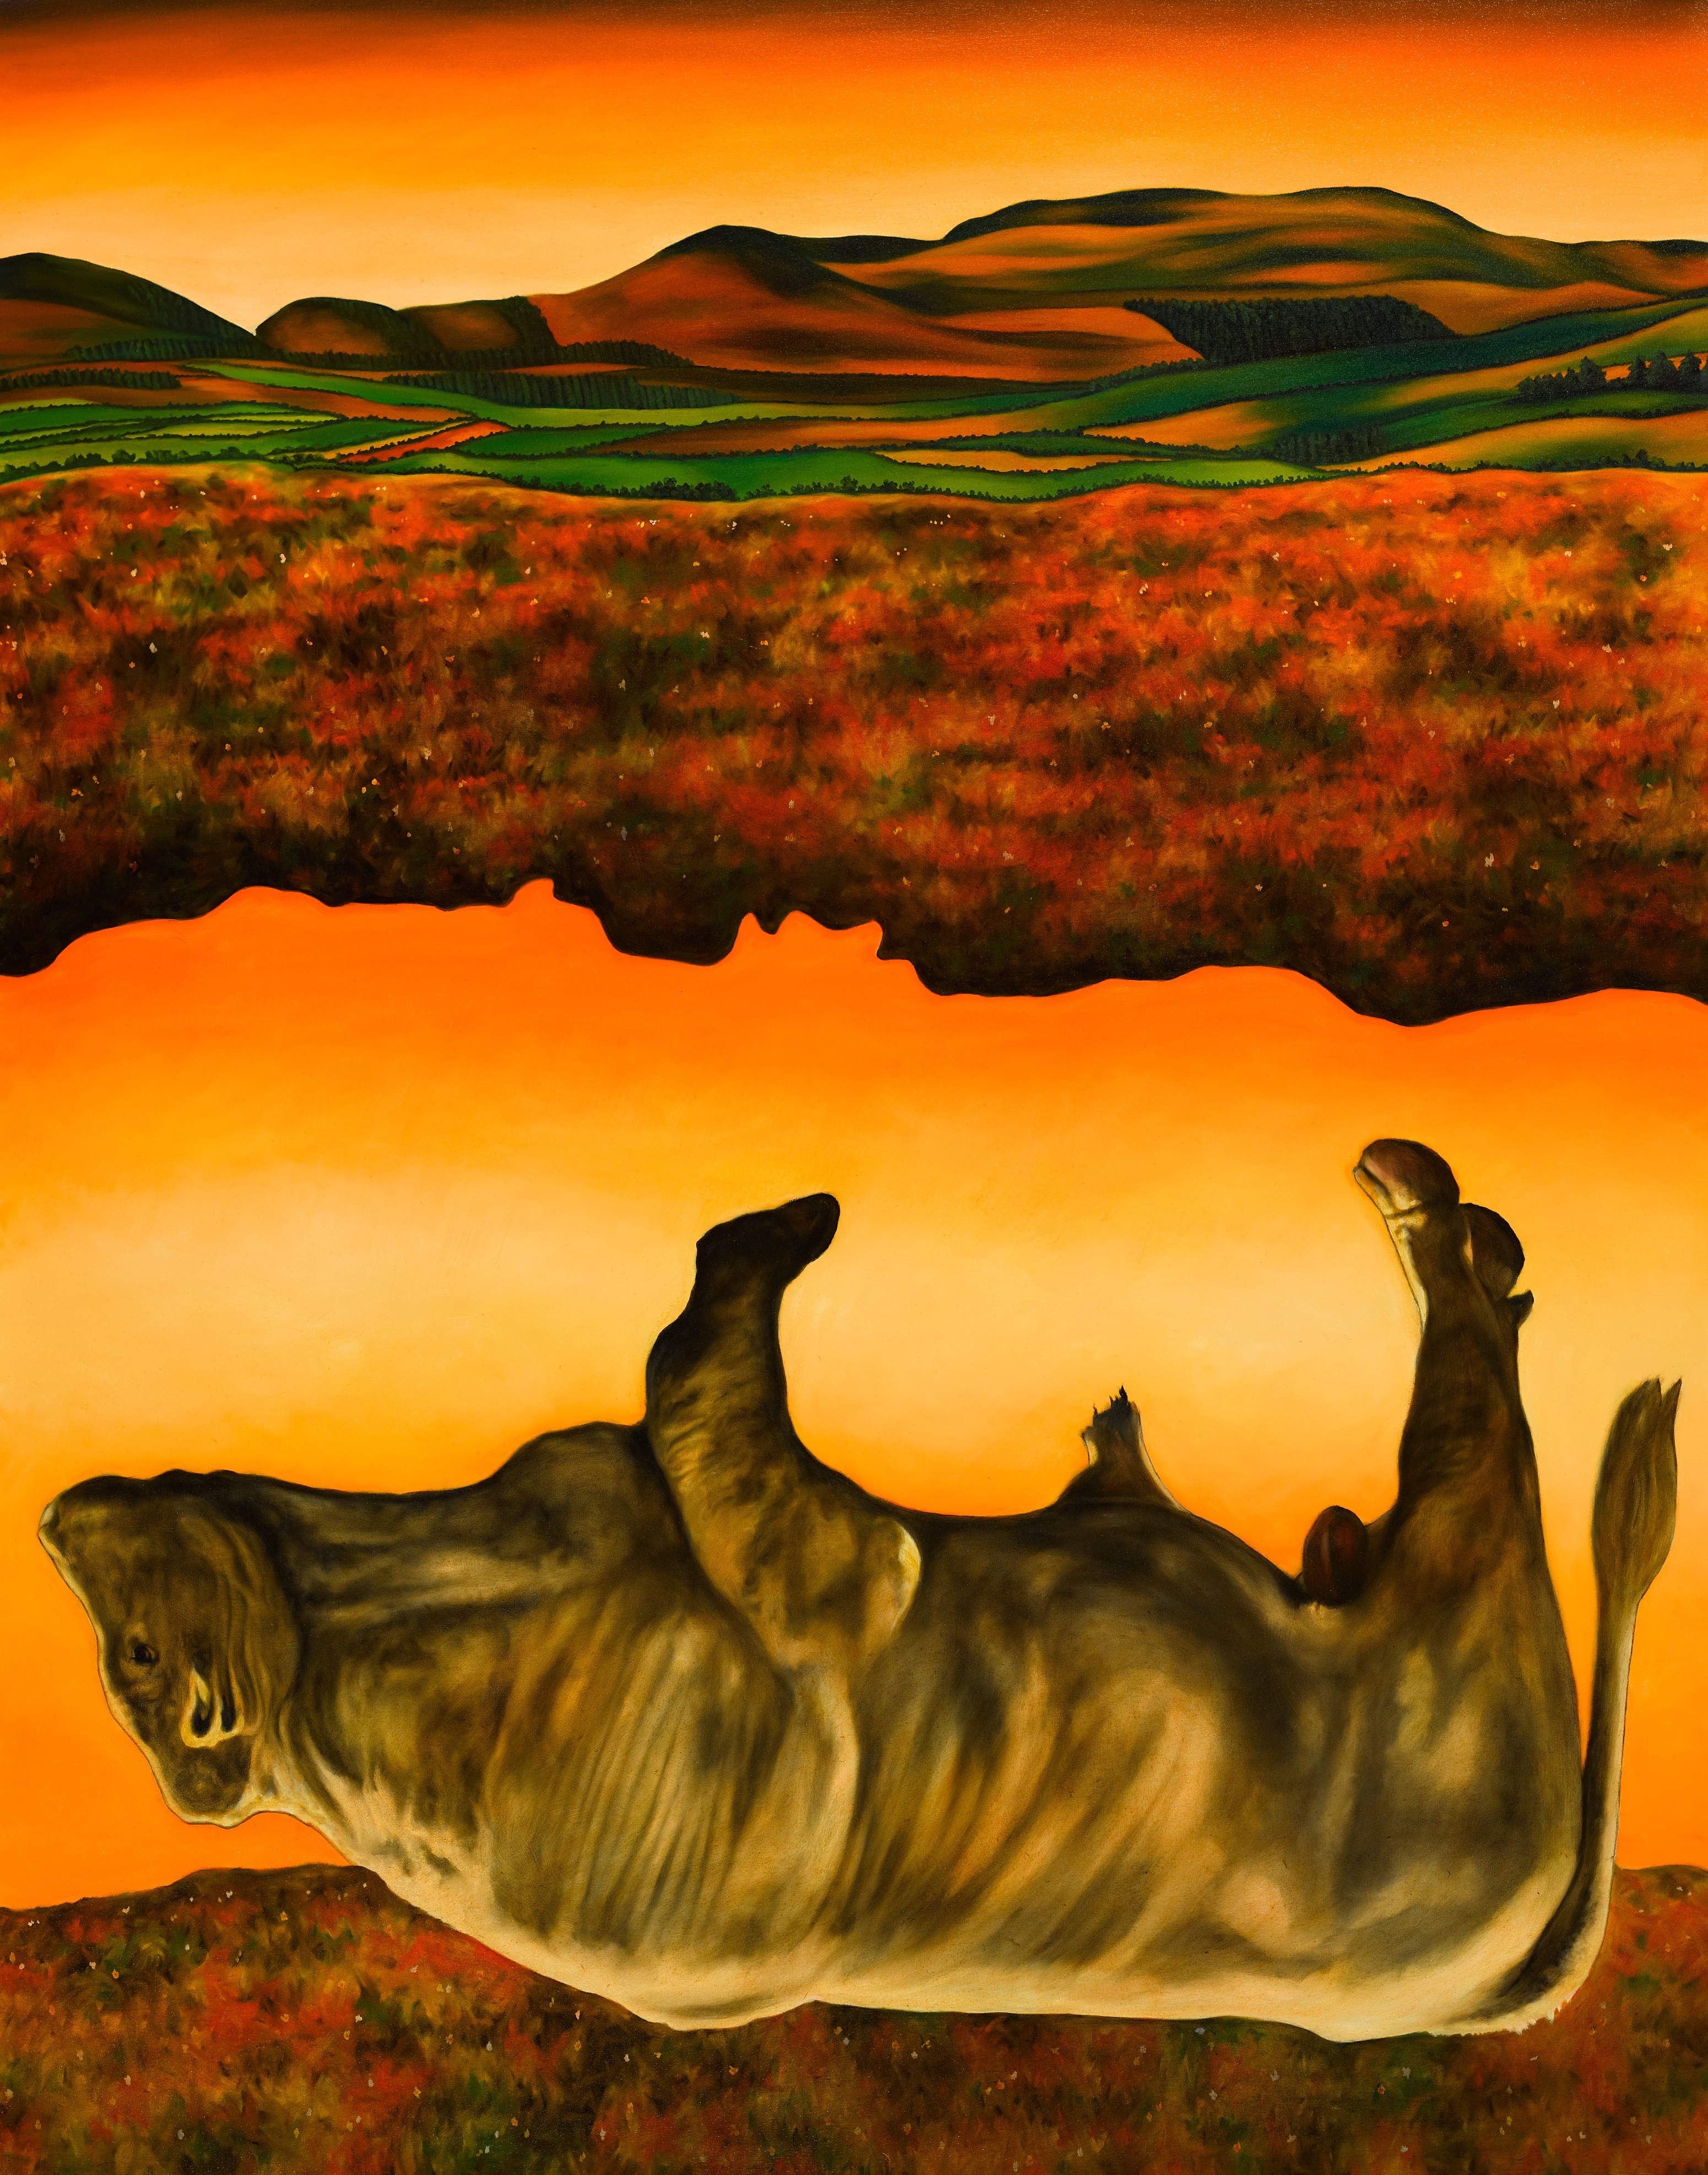 Dermot Seymour, The Valley of the Hurt, oil on canvas, 112 x 143 cm, 2020 | Dermot Seymour: A Covid border tangle | Thursday 1 October – Saturday 24 October 2020 | Kevin Kavanagh